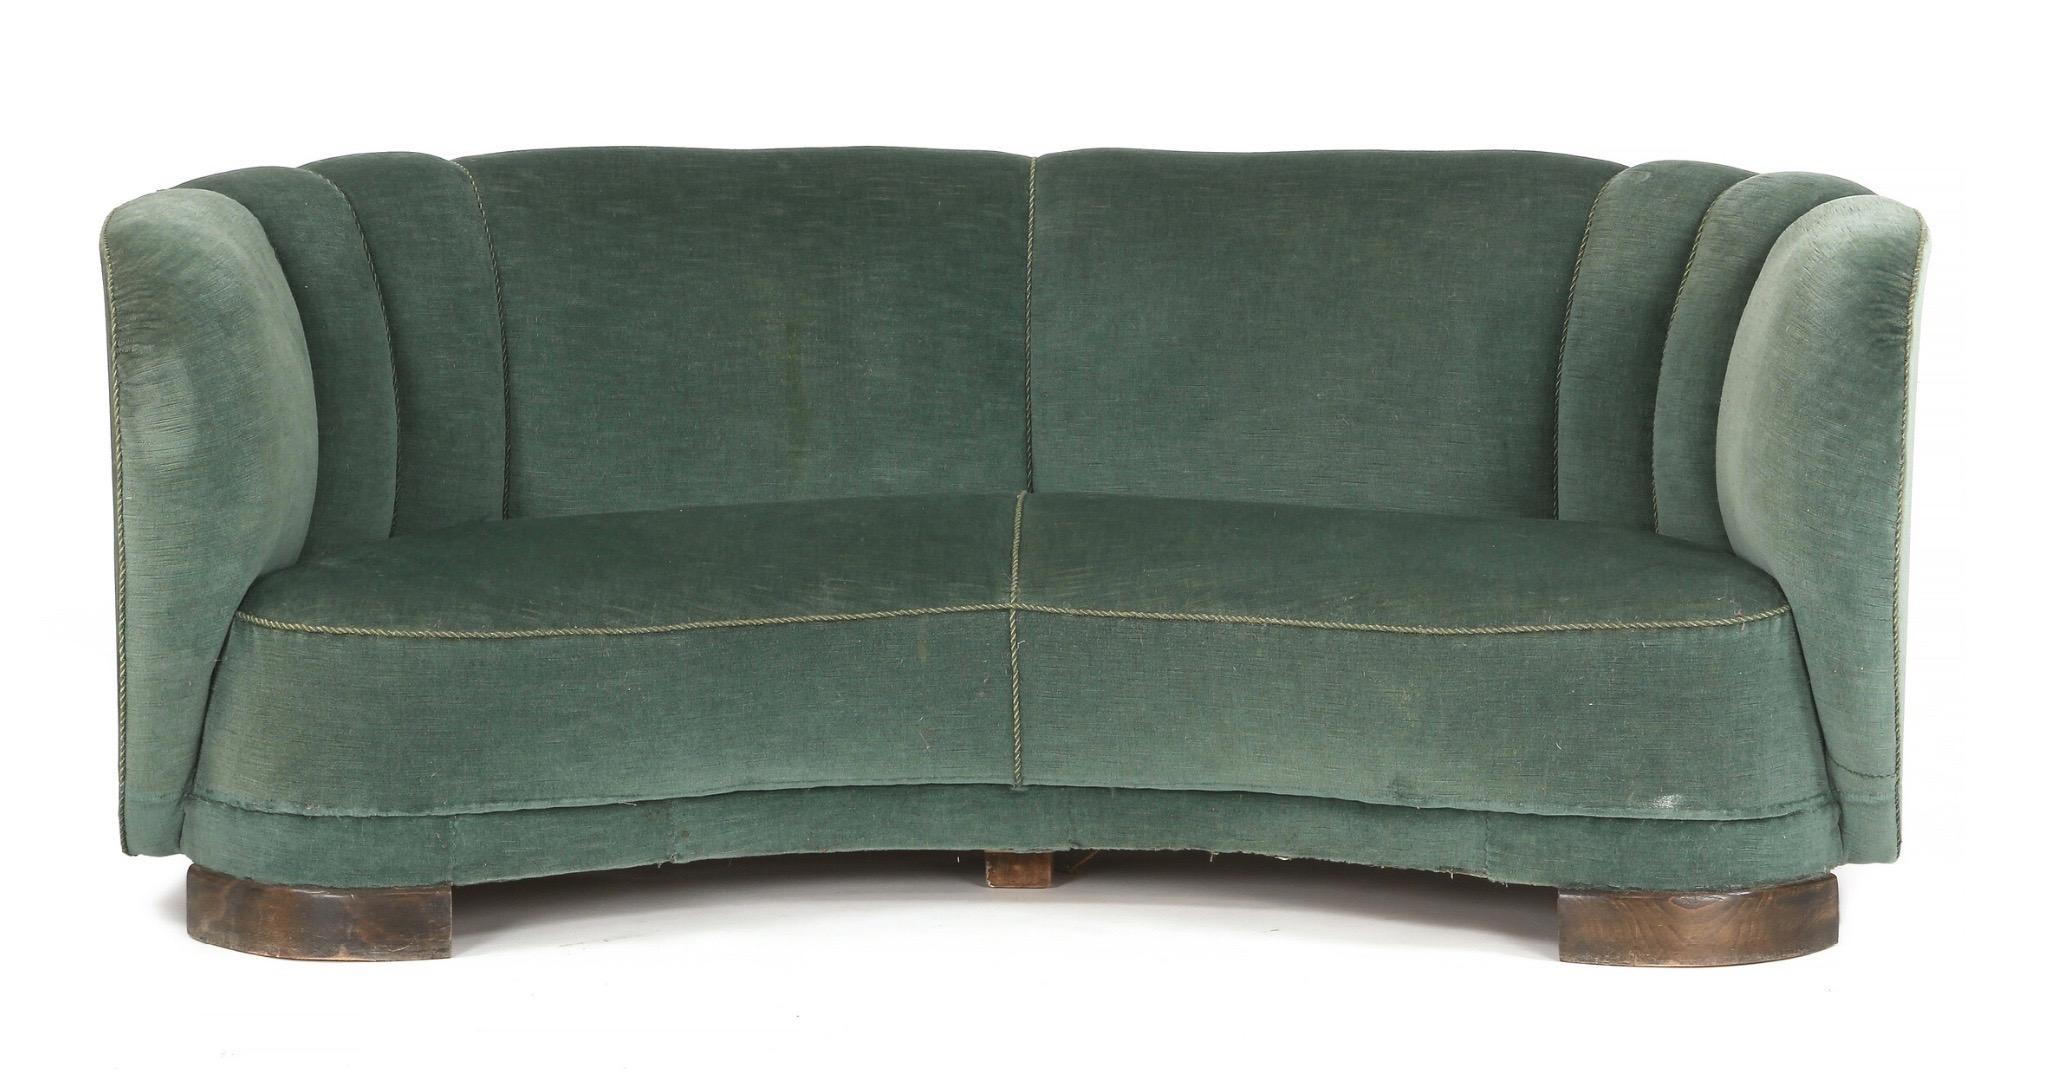 Mid-Century Modern Curved Green Banana Sofa in Style of Viggo Boesen / Fritz Hansen, Denmark, 1940s